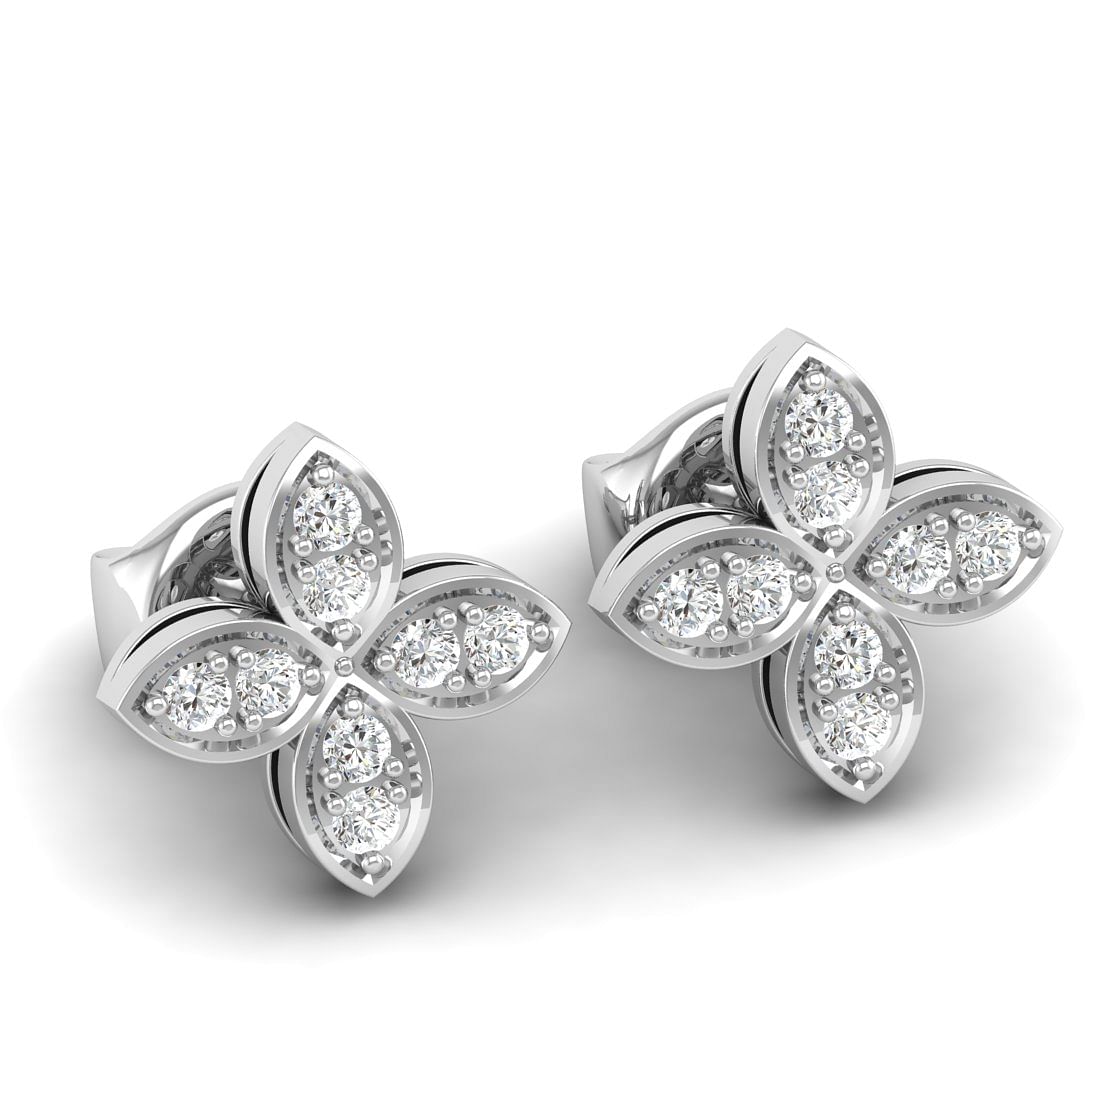 White Gold Justine Leaf Diamond Earrings For Women